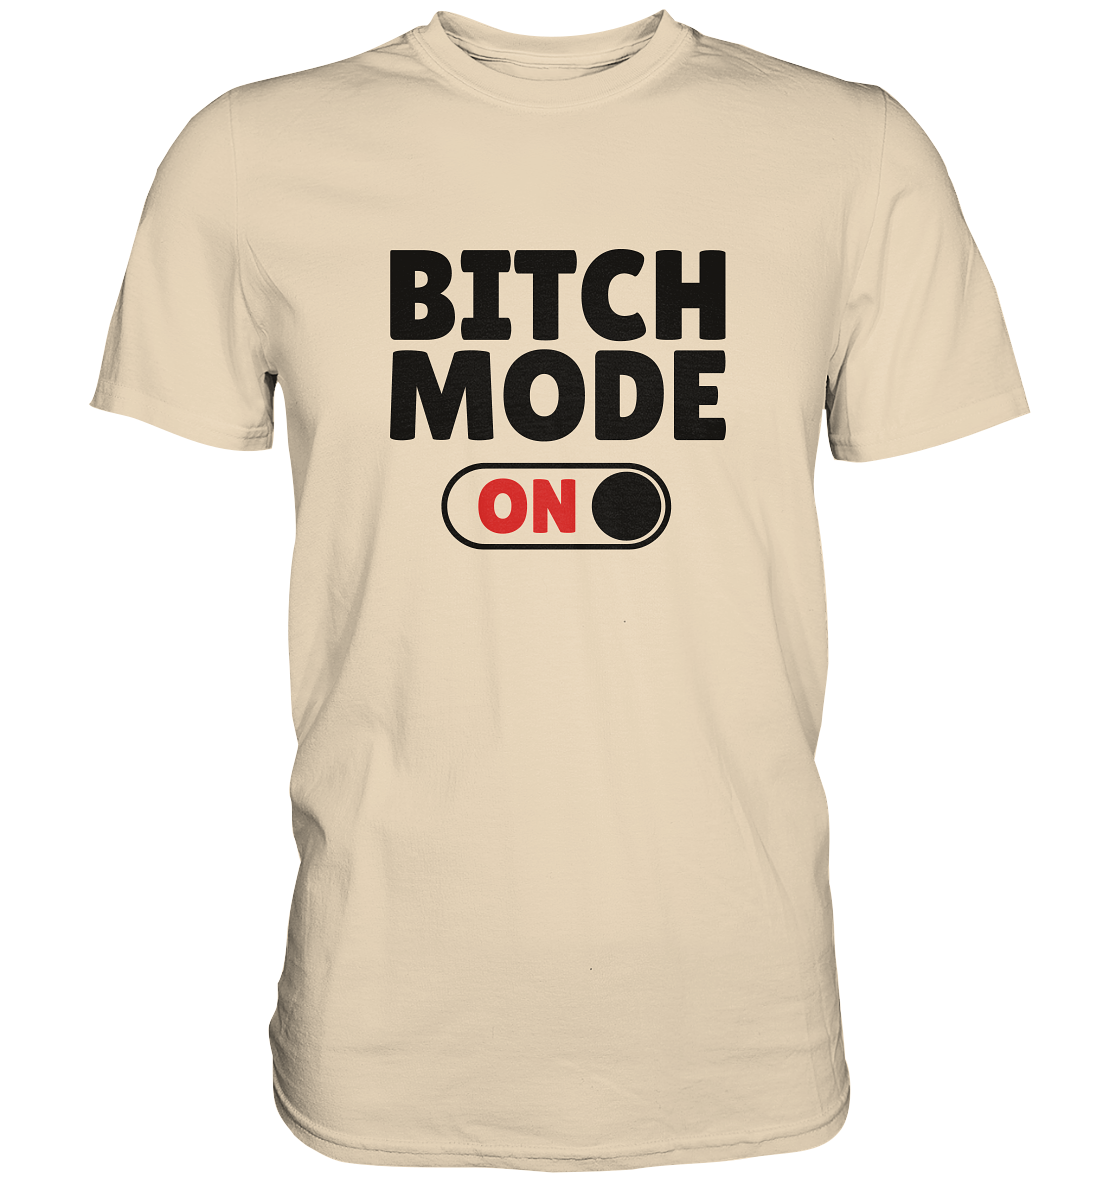 Bitch mode on.- Unisex Premium Shirt